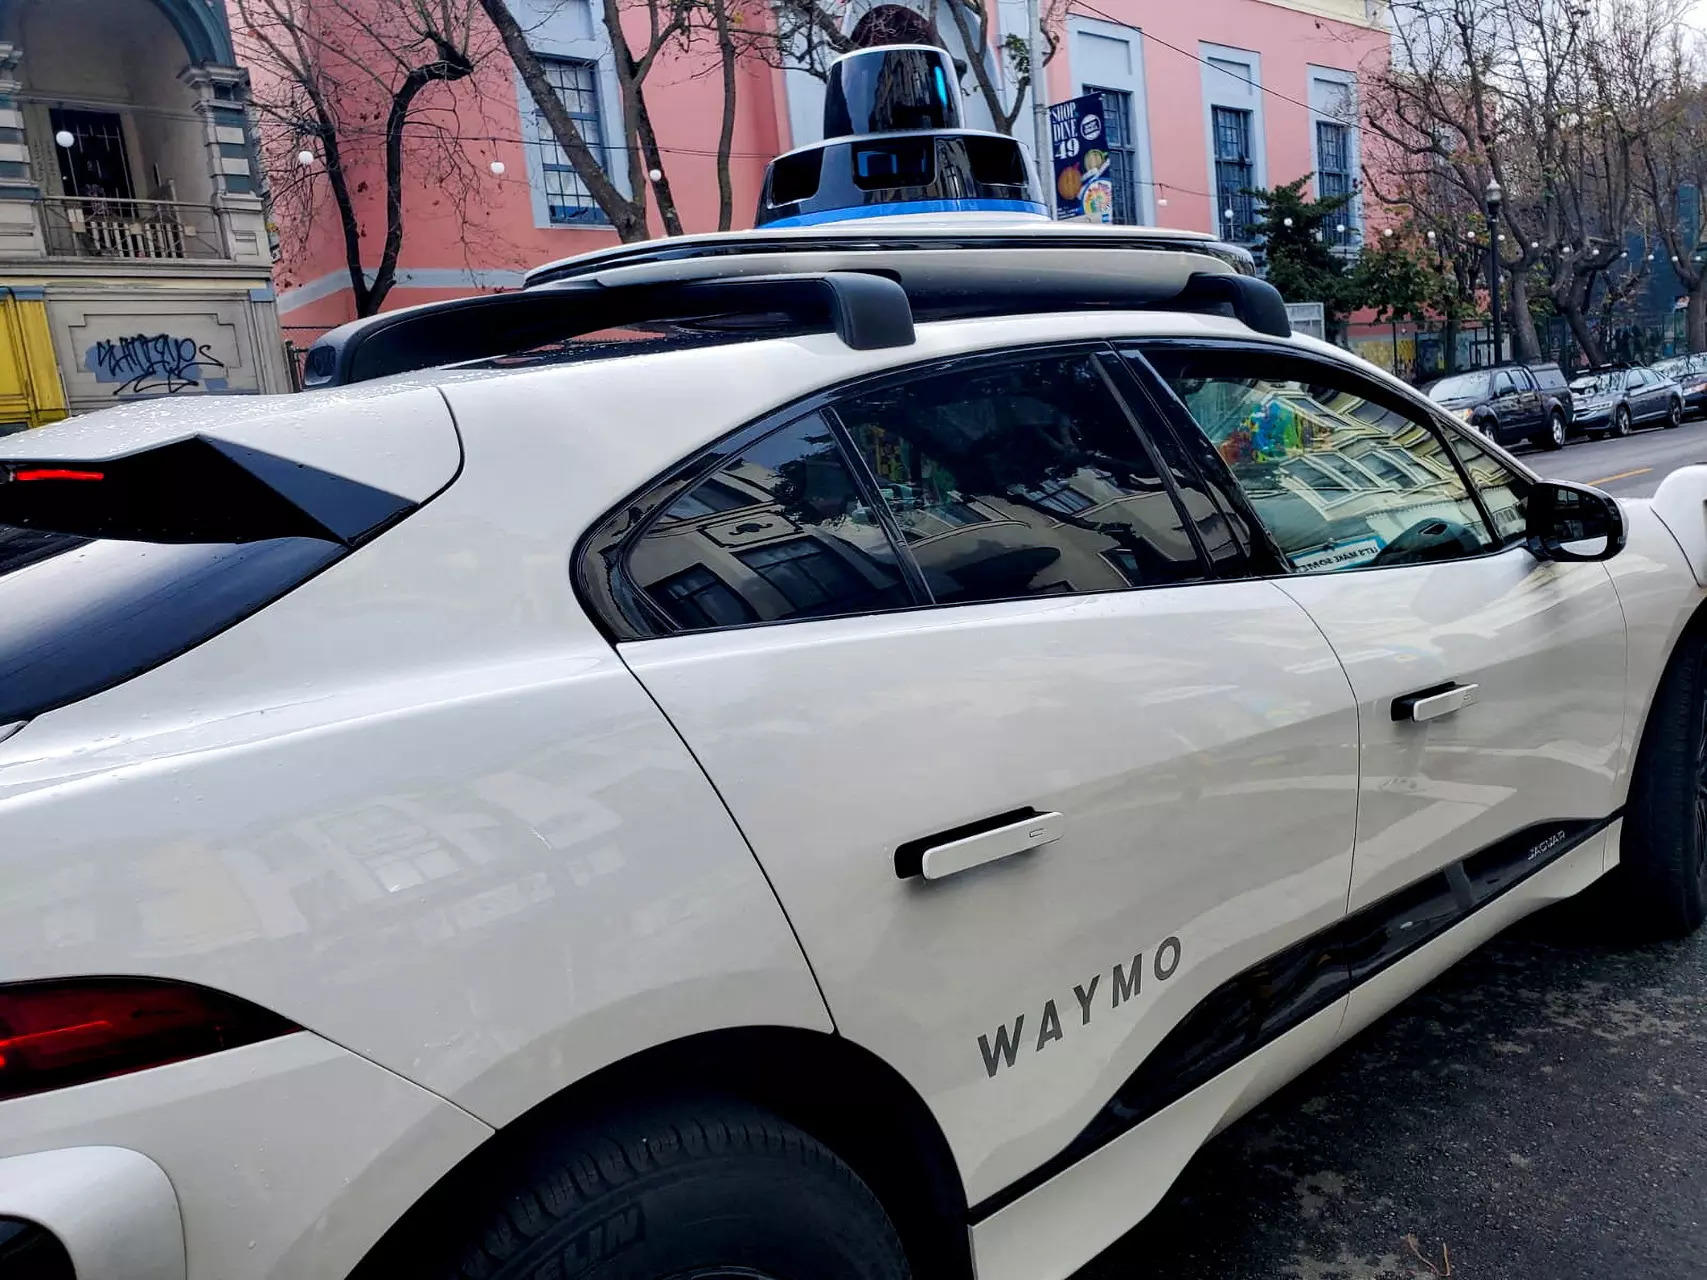 San Francisco Waymo arson sparks fresh debate on self-driving cars, ET Auto